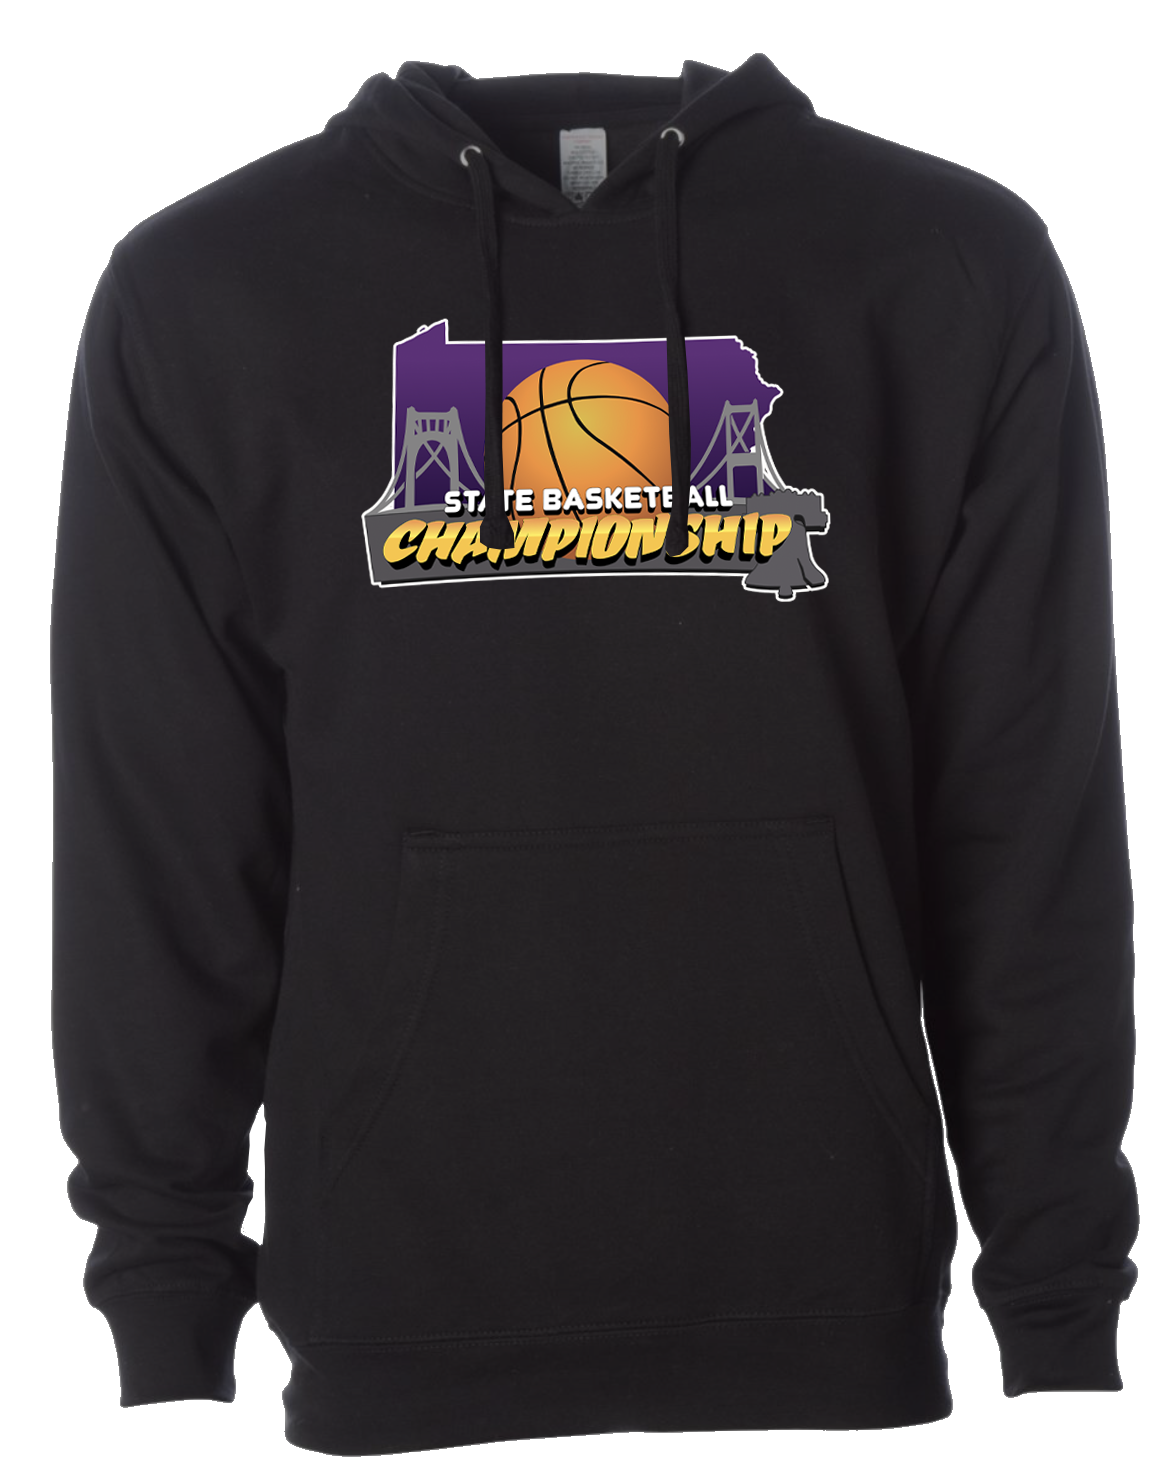 Black Pennsylvania State Basketball Sweatshirt